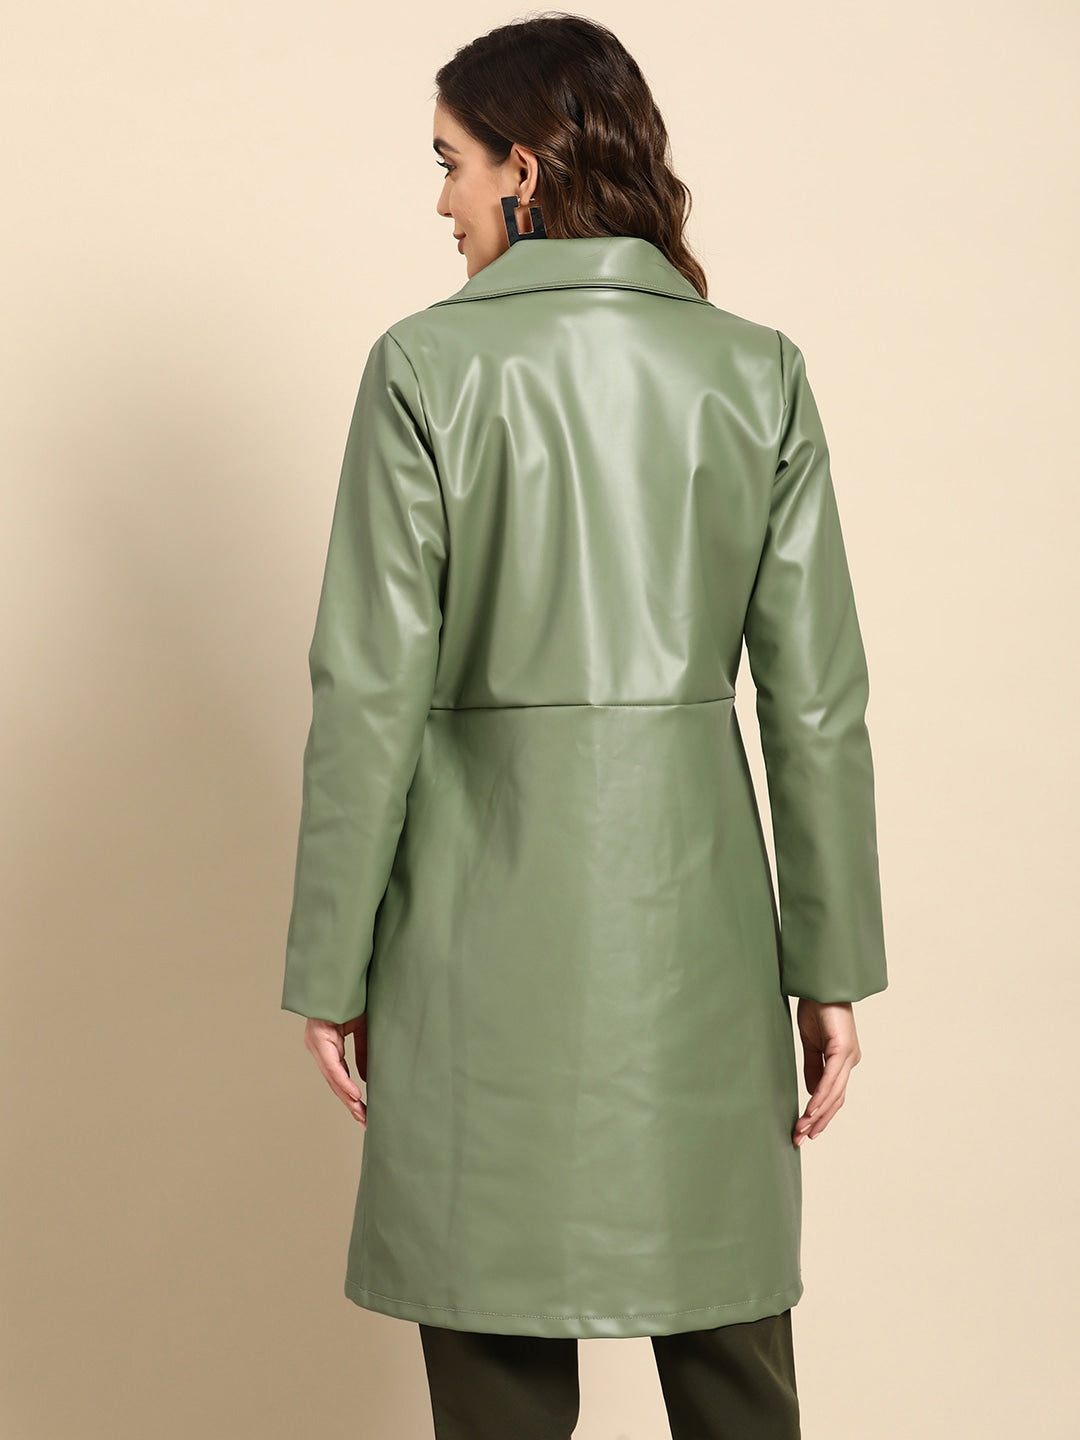 Olive Green Women Leather Overcoat | QAWACH